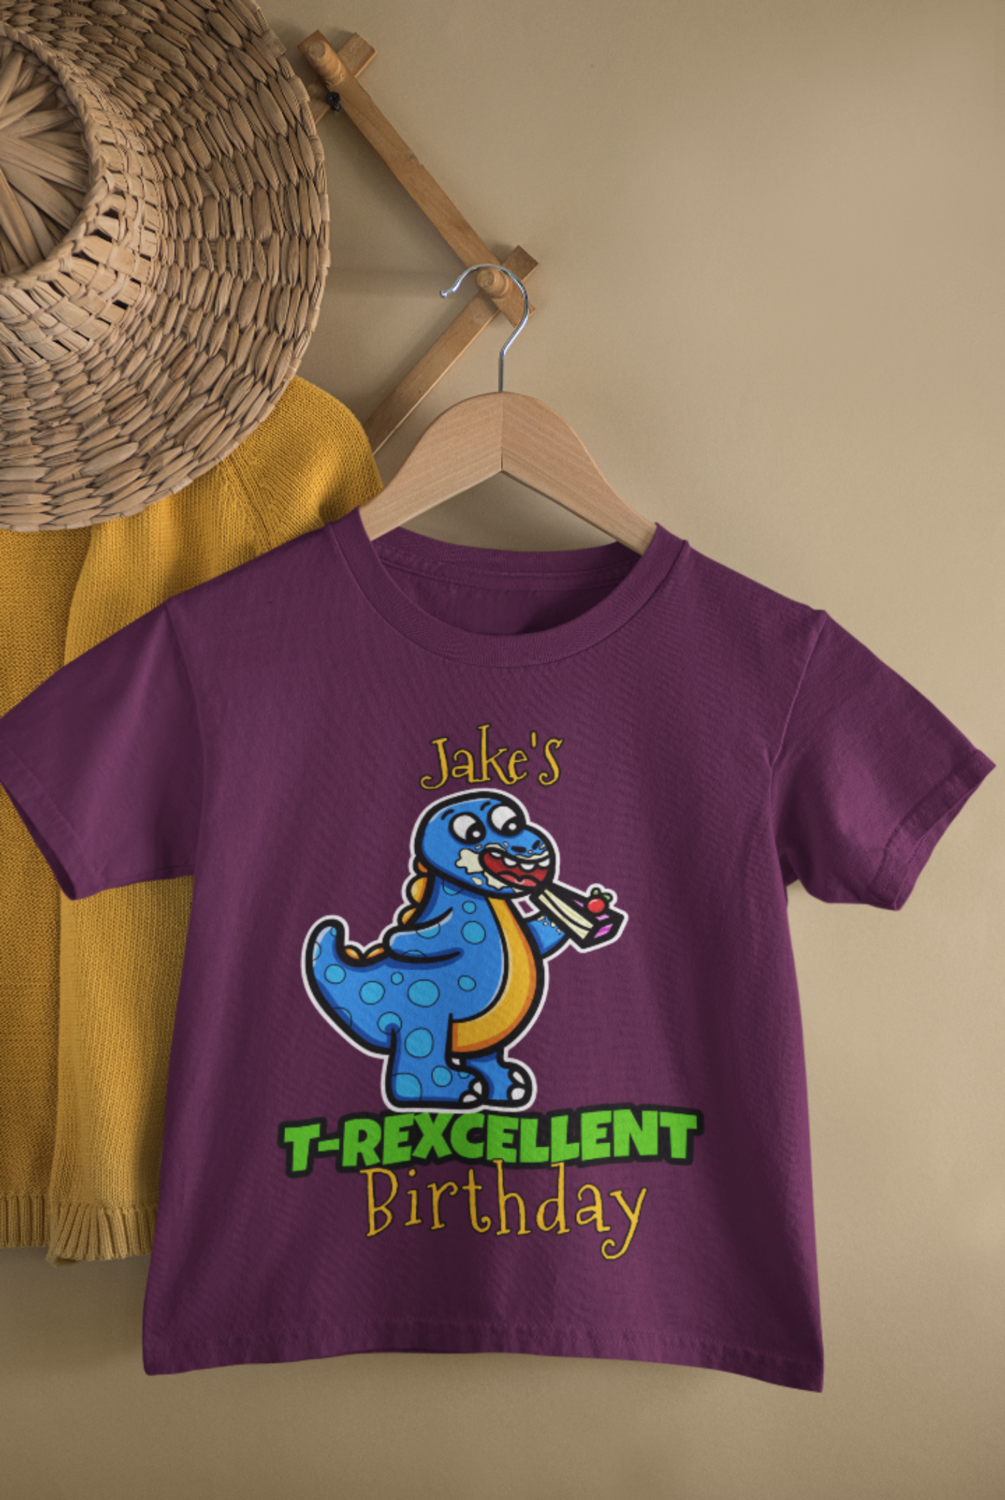 Customised Birthday T-shirts for Boys - Dinosaur tshirts for boys. Personalise tshirt - '(NAME) T-REXCELLENT BIRTHDAY'